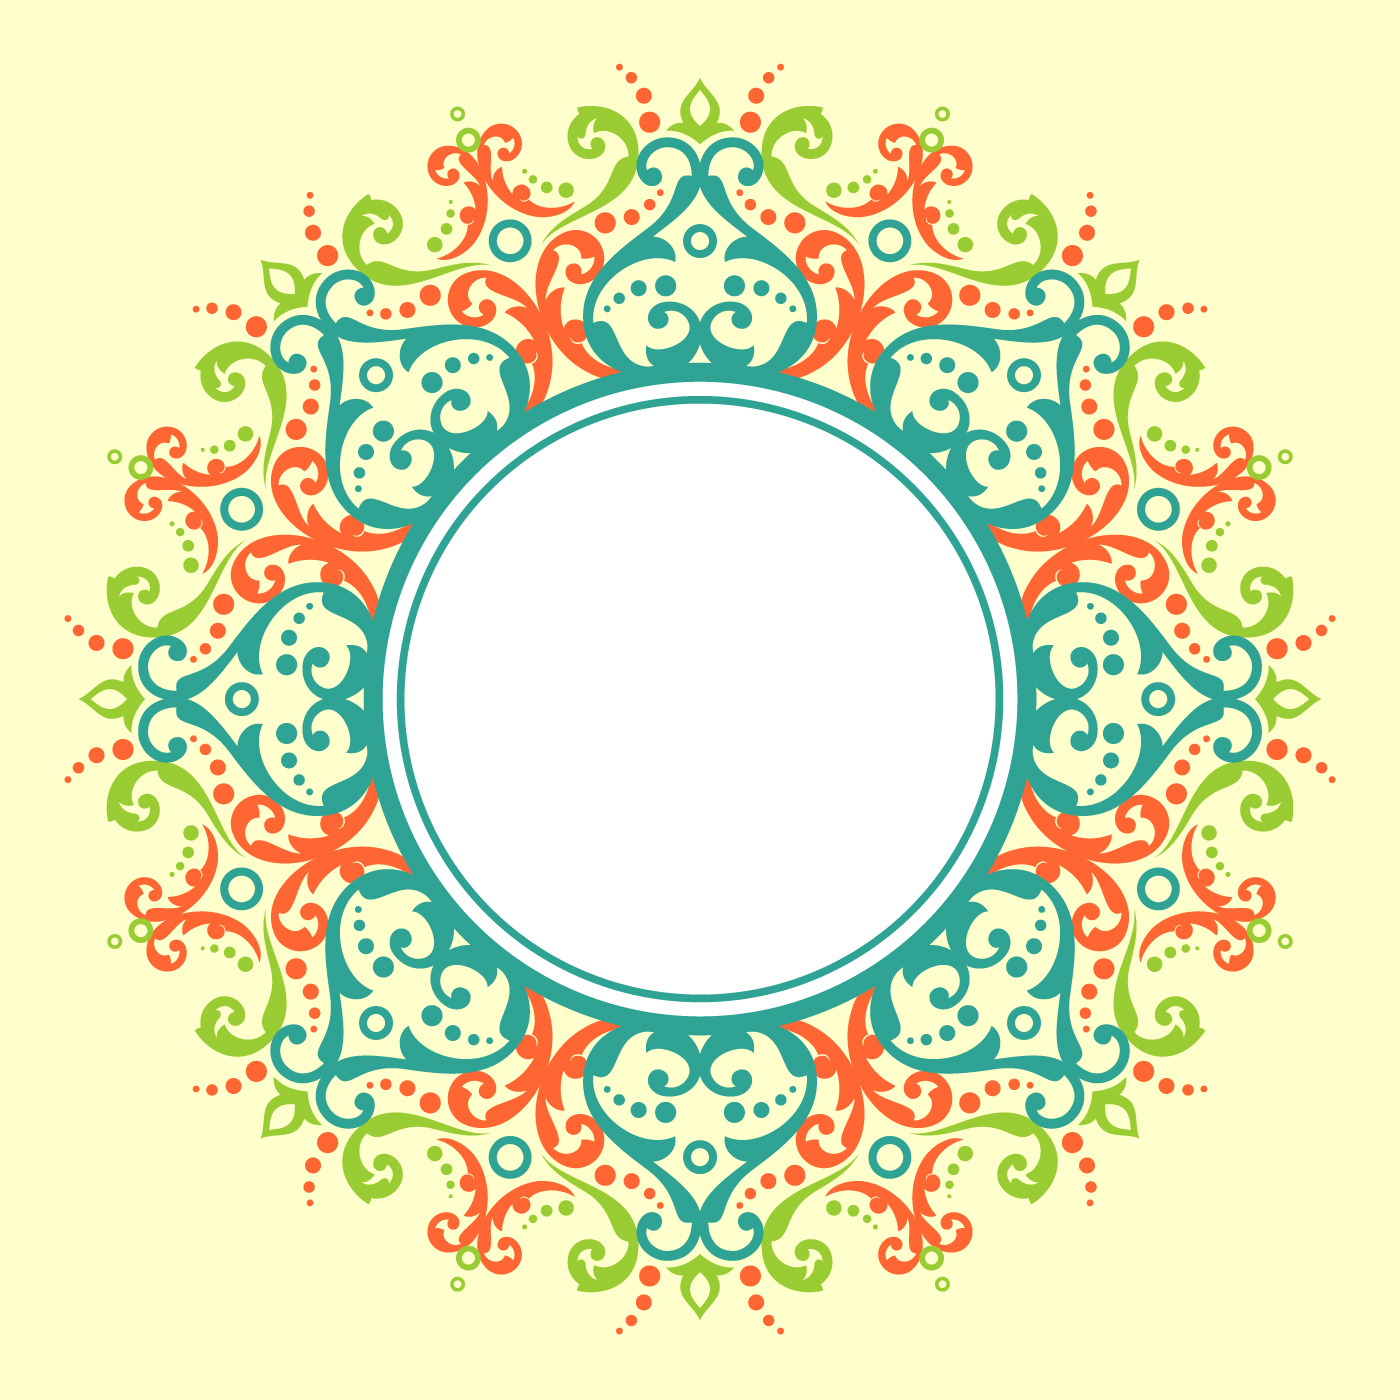 Download Floral Circle Border Free Vector Art - (21952 Free Downloads)